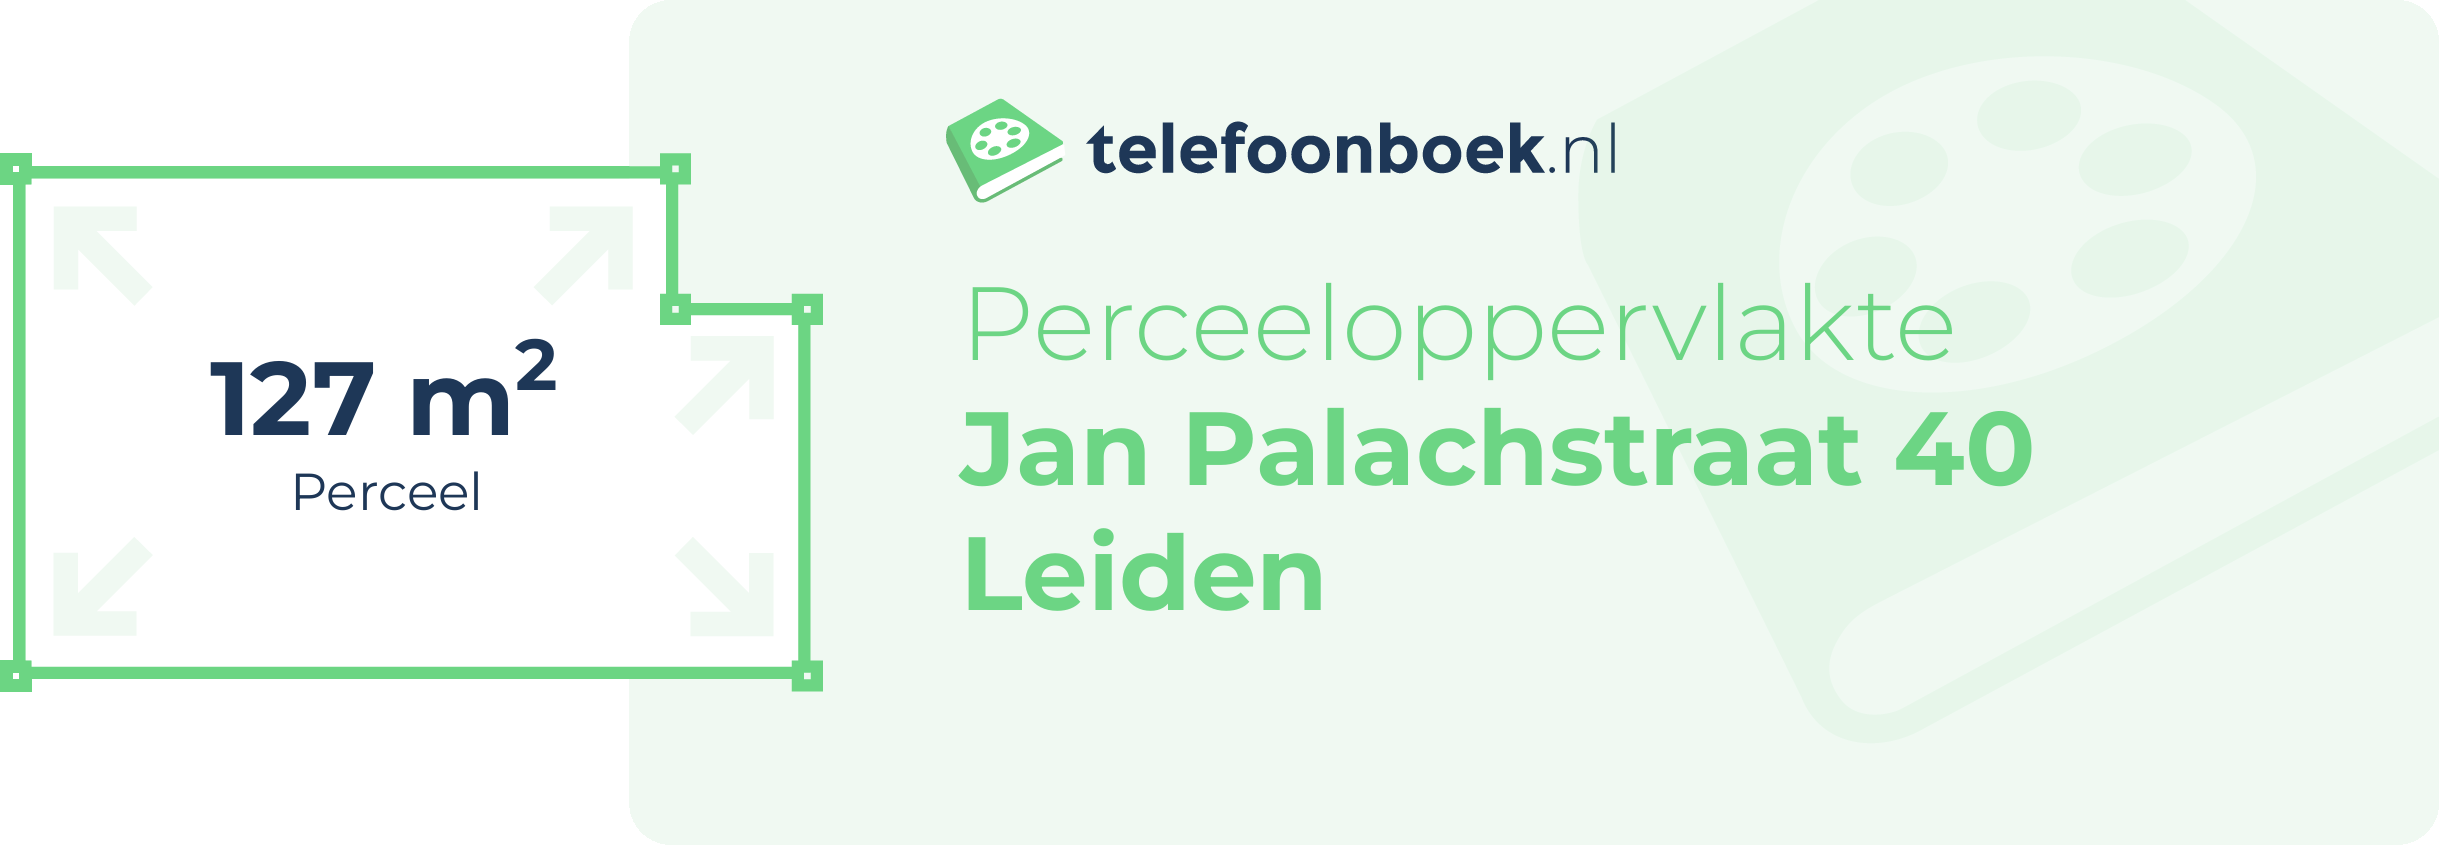 Perceeloppervlakte Jan Palachstraat 40 Leiden